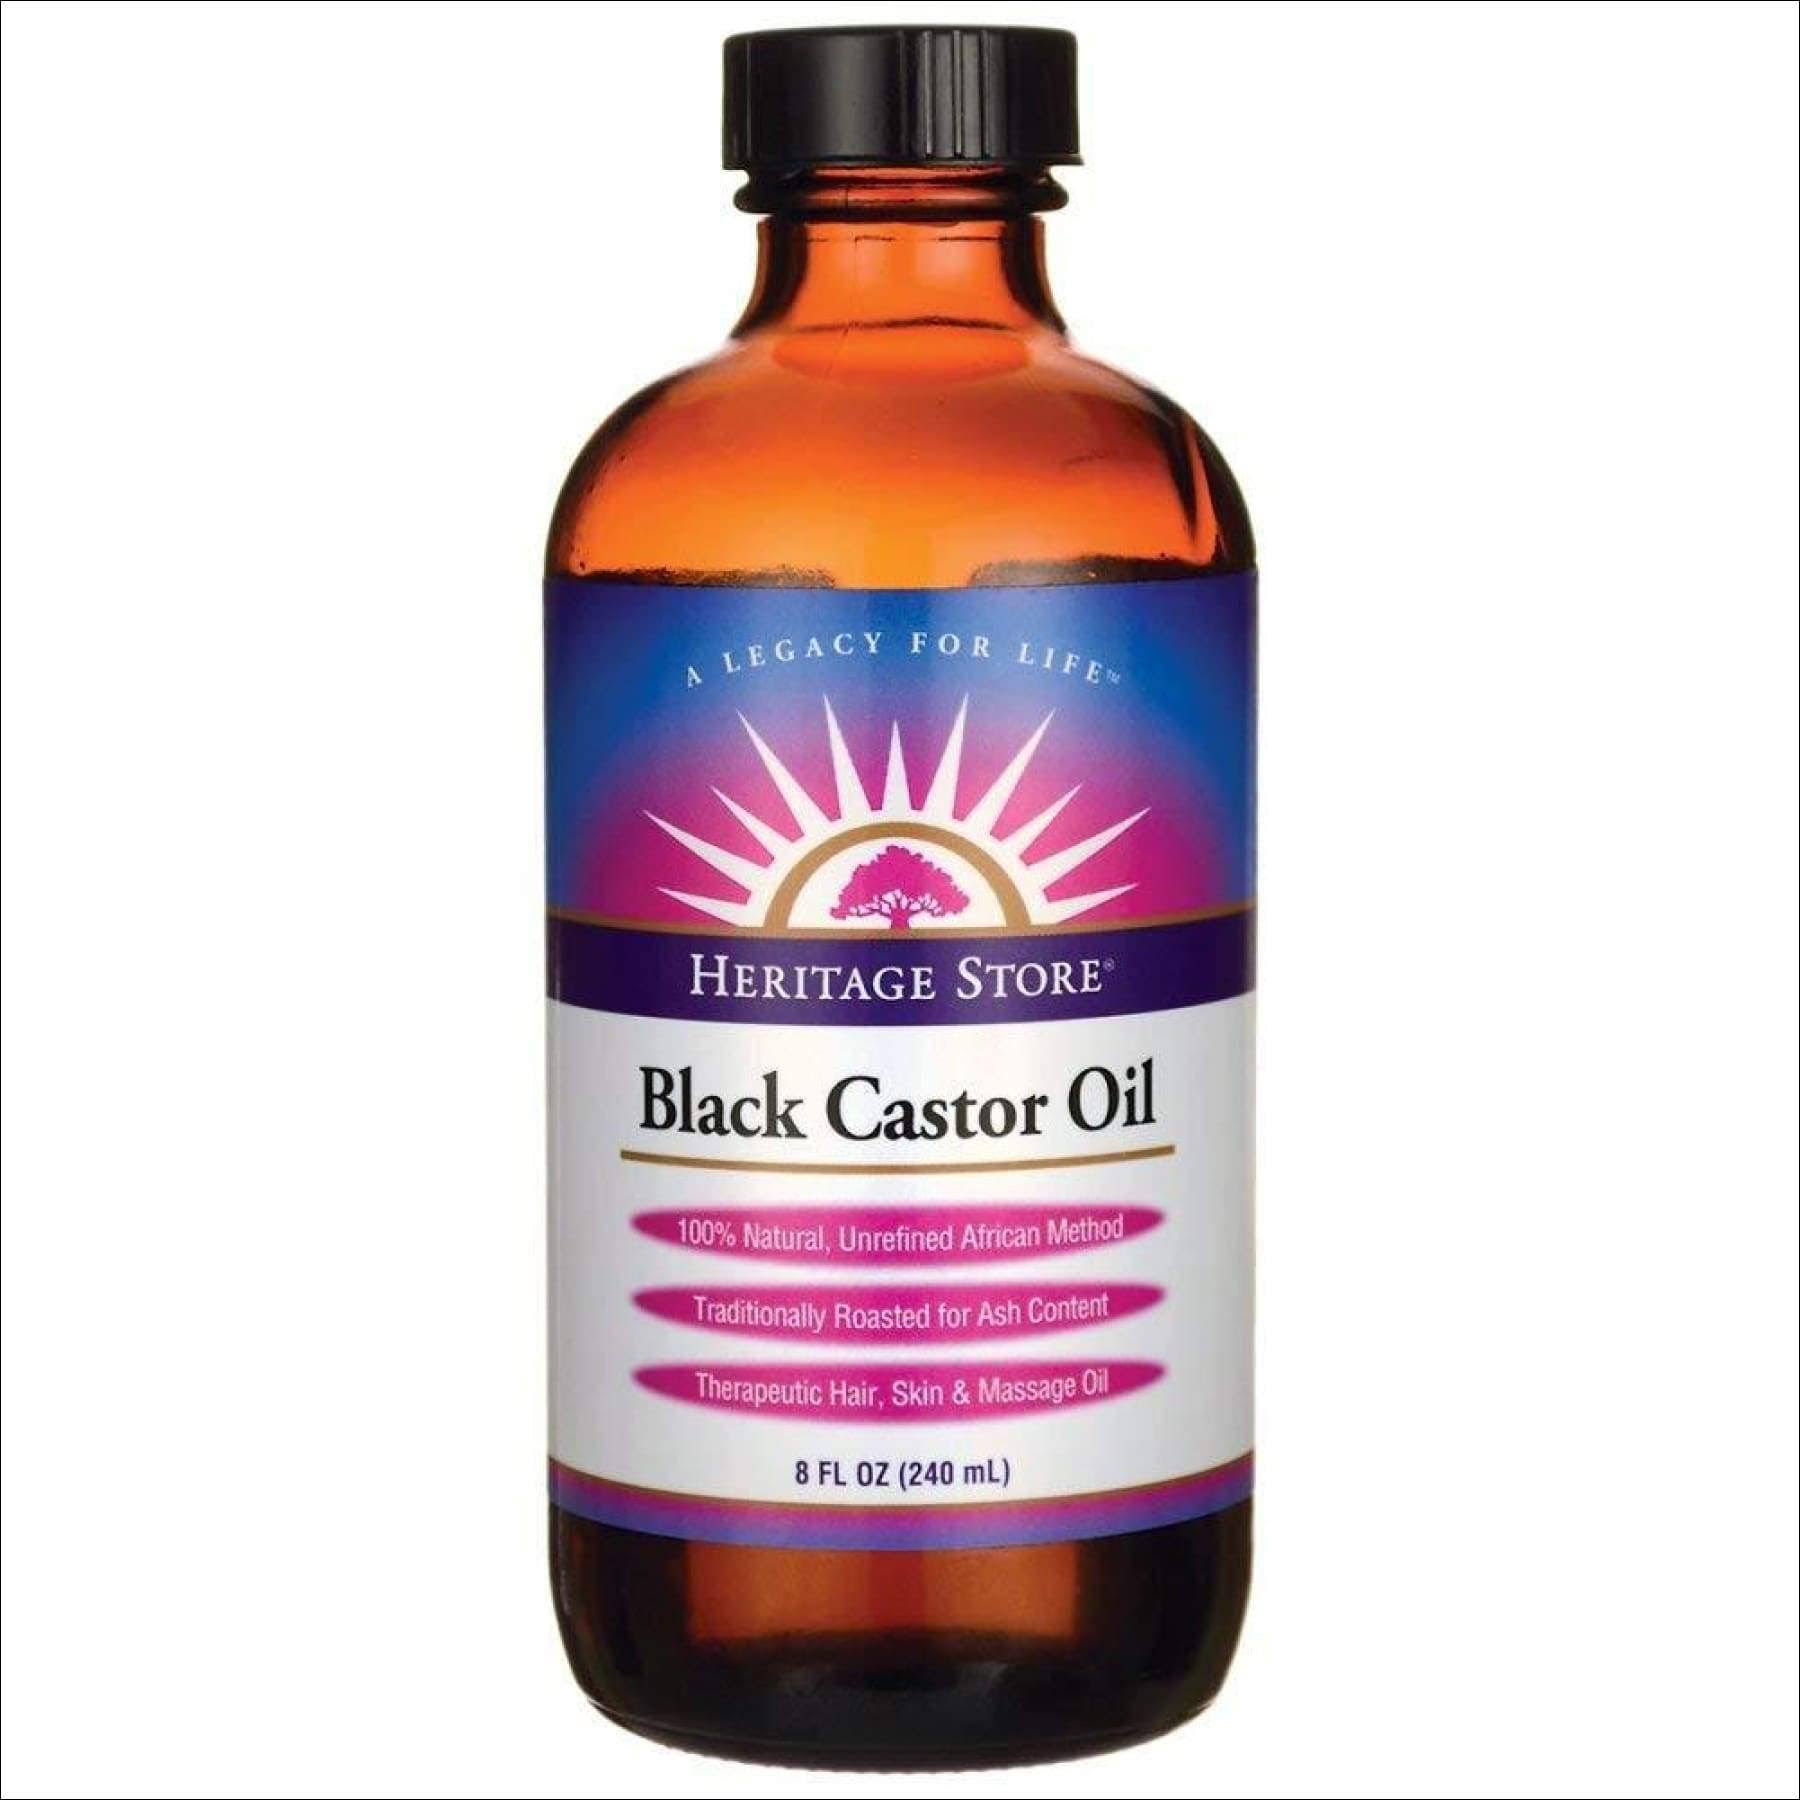 Heritage Store Black Castor Oil - 8oz